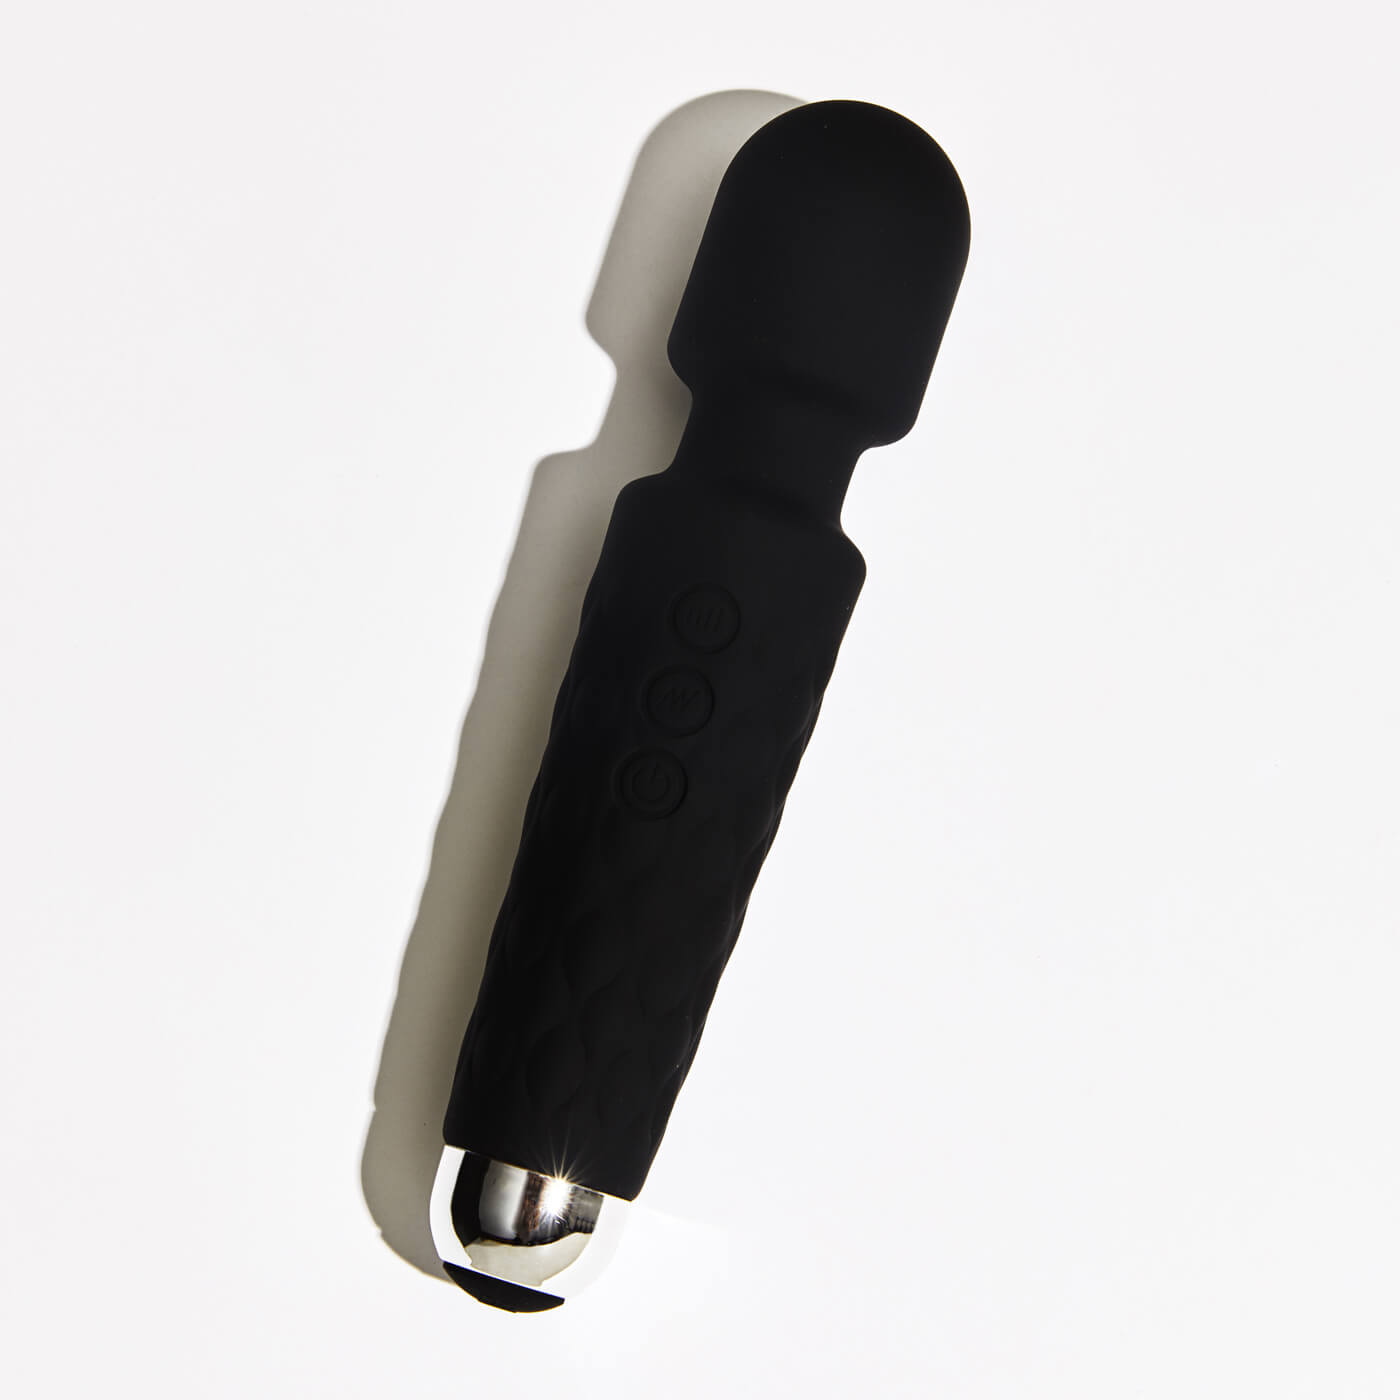 Simpli Pleasure 10 Function USB Rechargeable Silicone Wand Vibrator